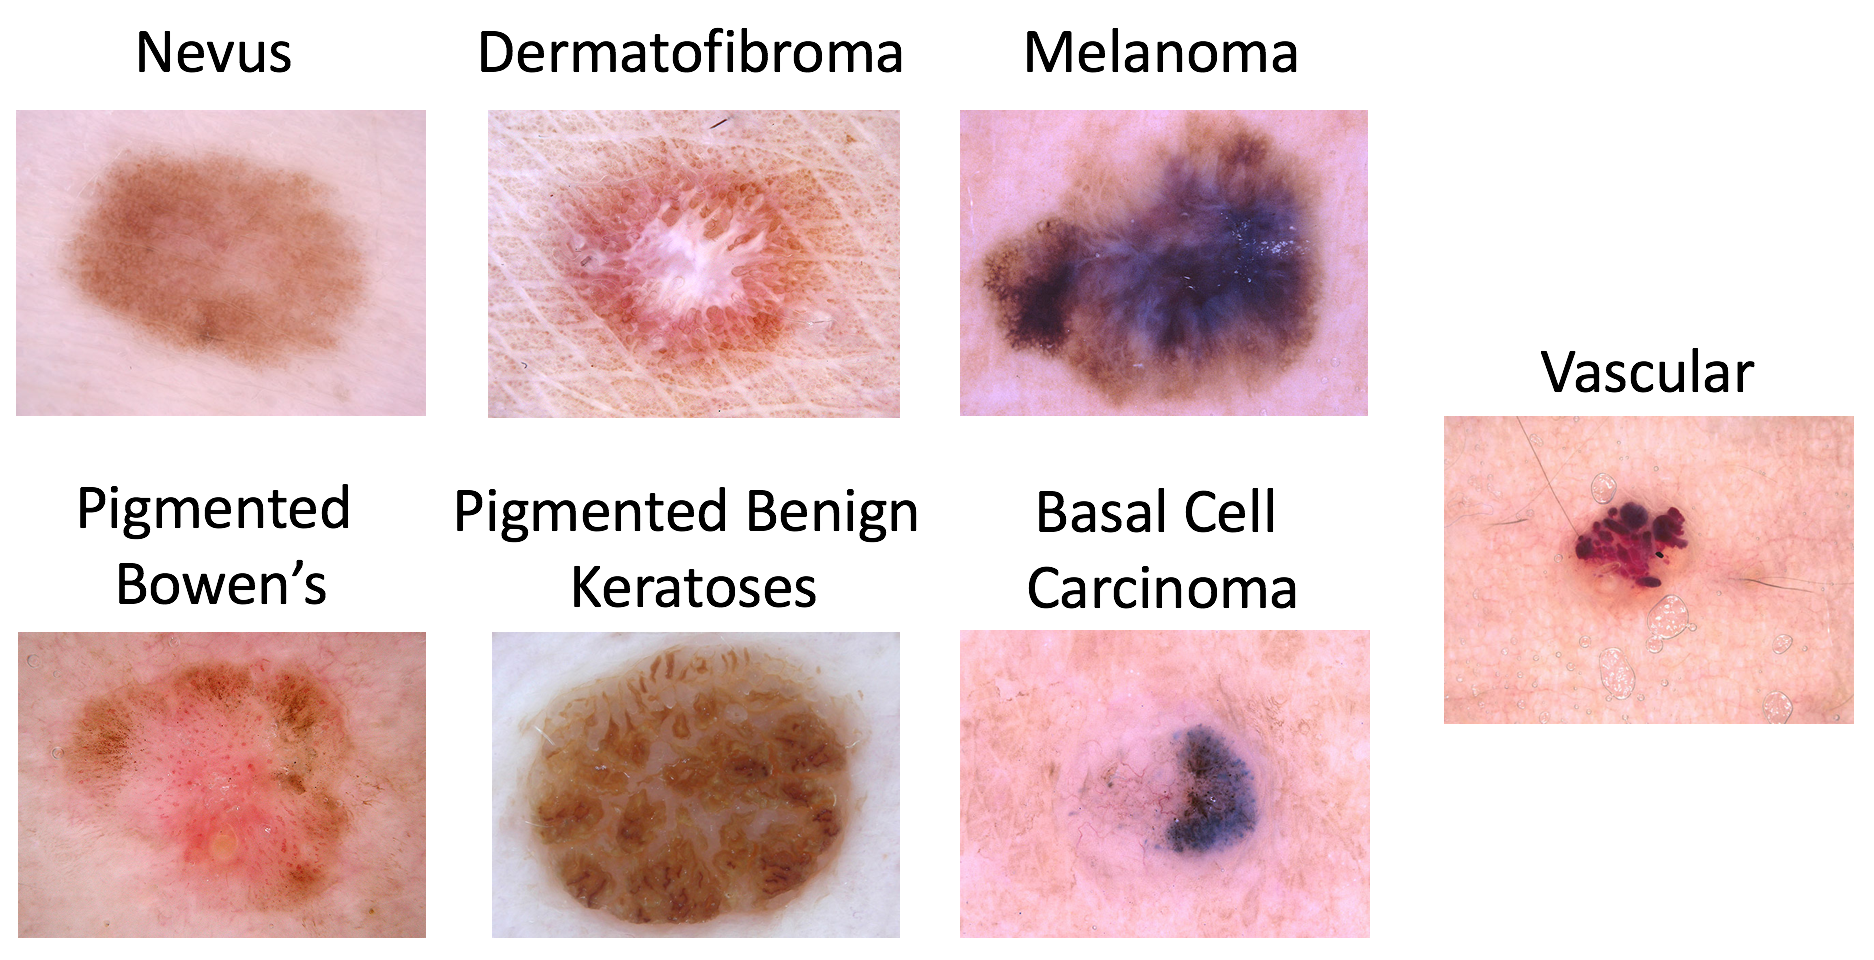 Isic 2019 Skin Lesion Analysis Towards Melanoma Detection Task 2 Daisylabs 8058